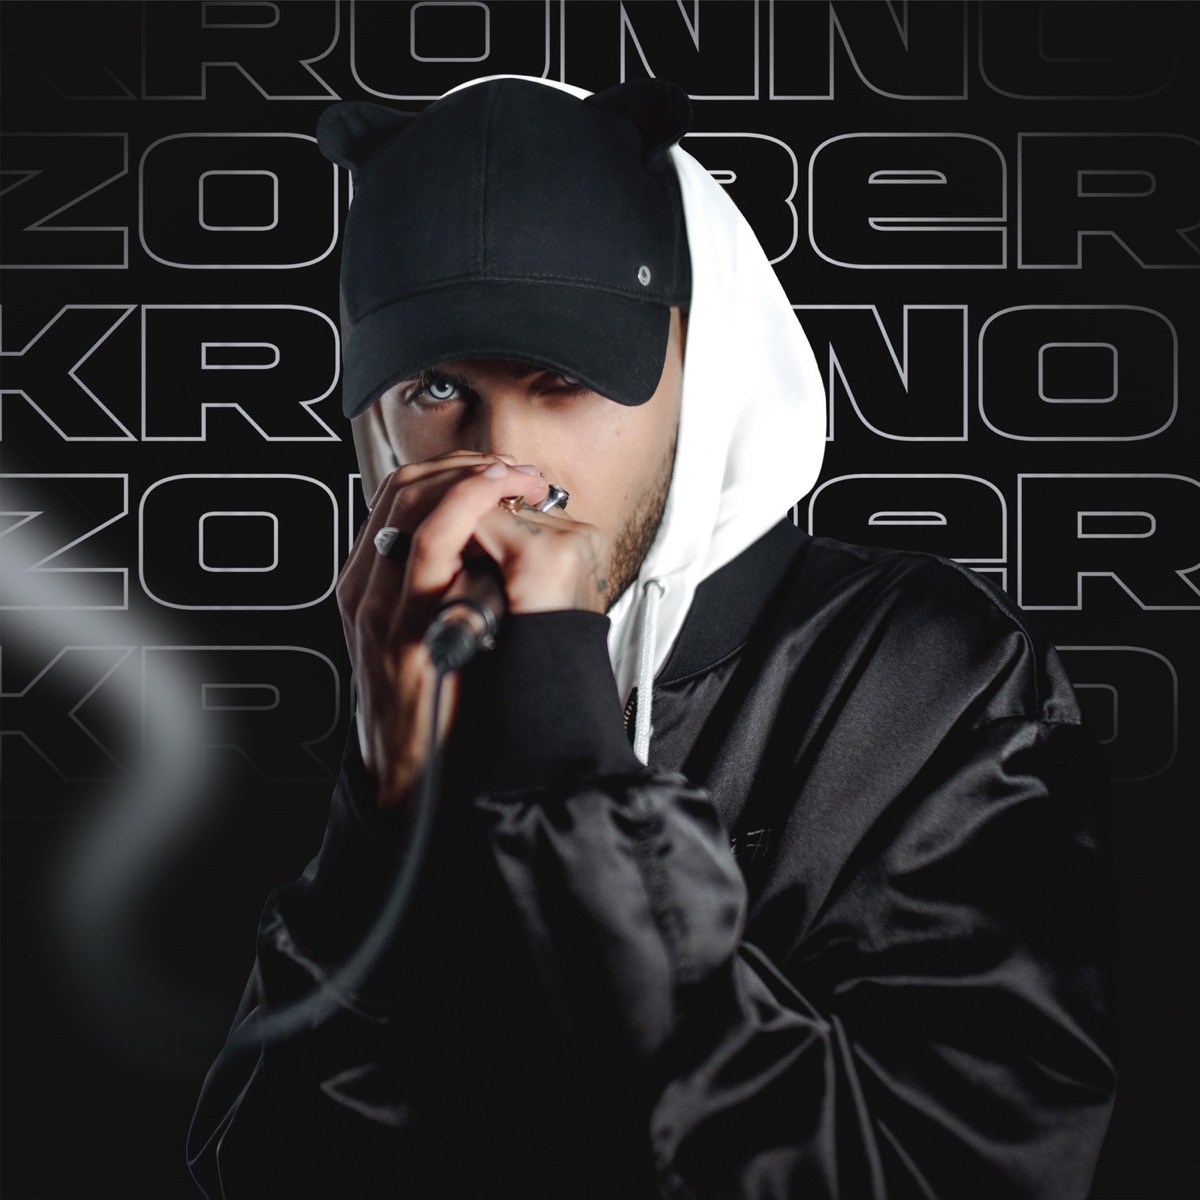 Jeff the Killer vs Homicidal Liu (feat. Cyclo) - Single - Album by Kronno  Zomber - Apple Music